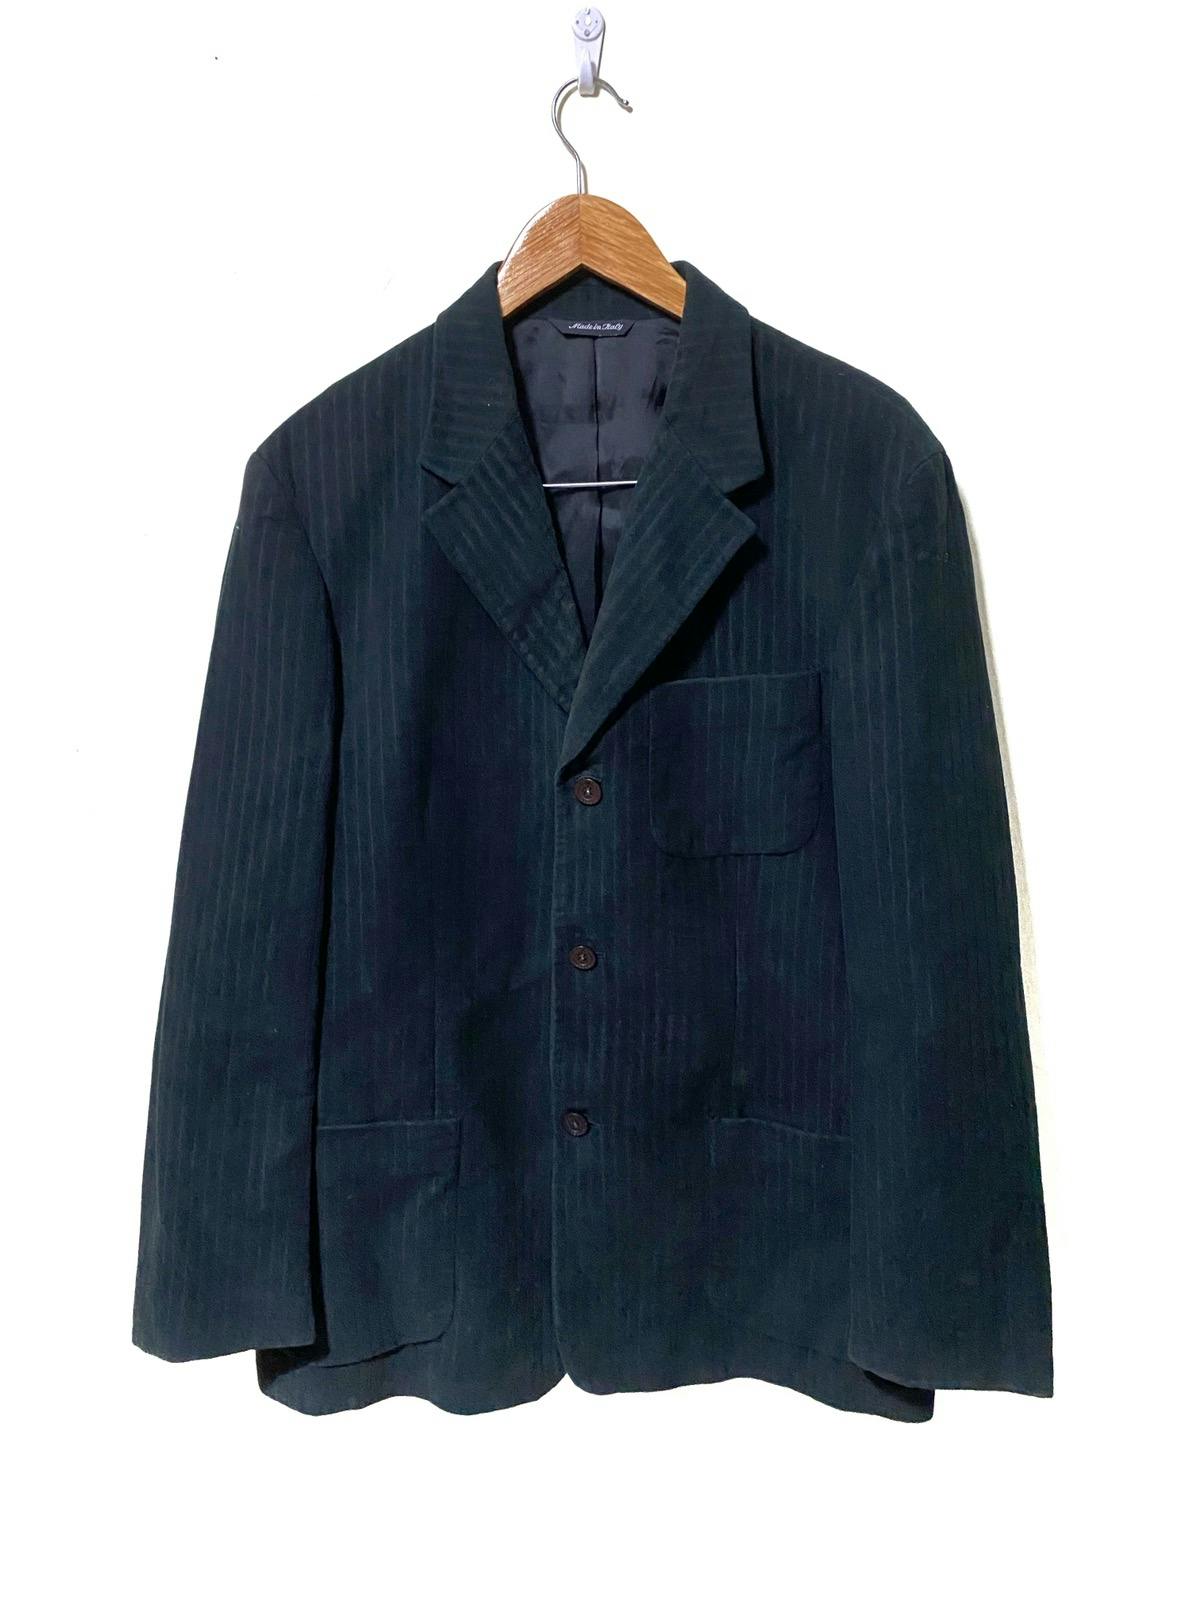 Vintage Versus Gianni Versace Jacket Blazer - 1